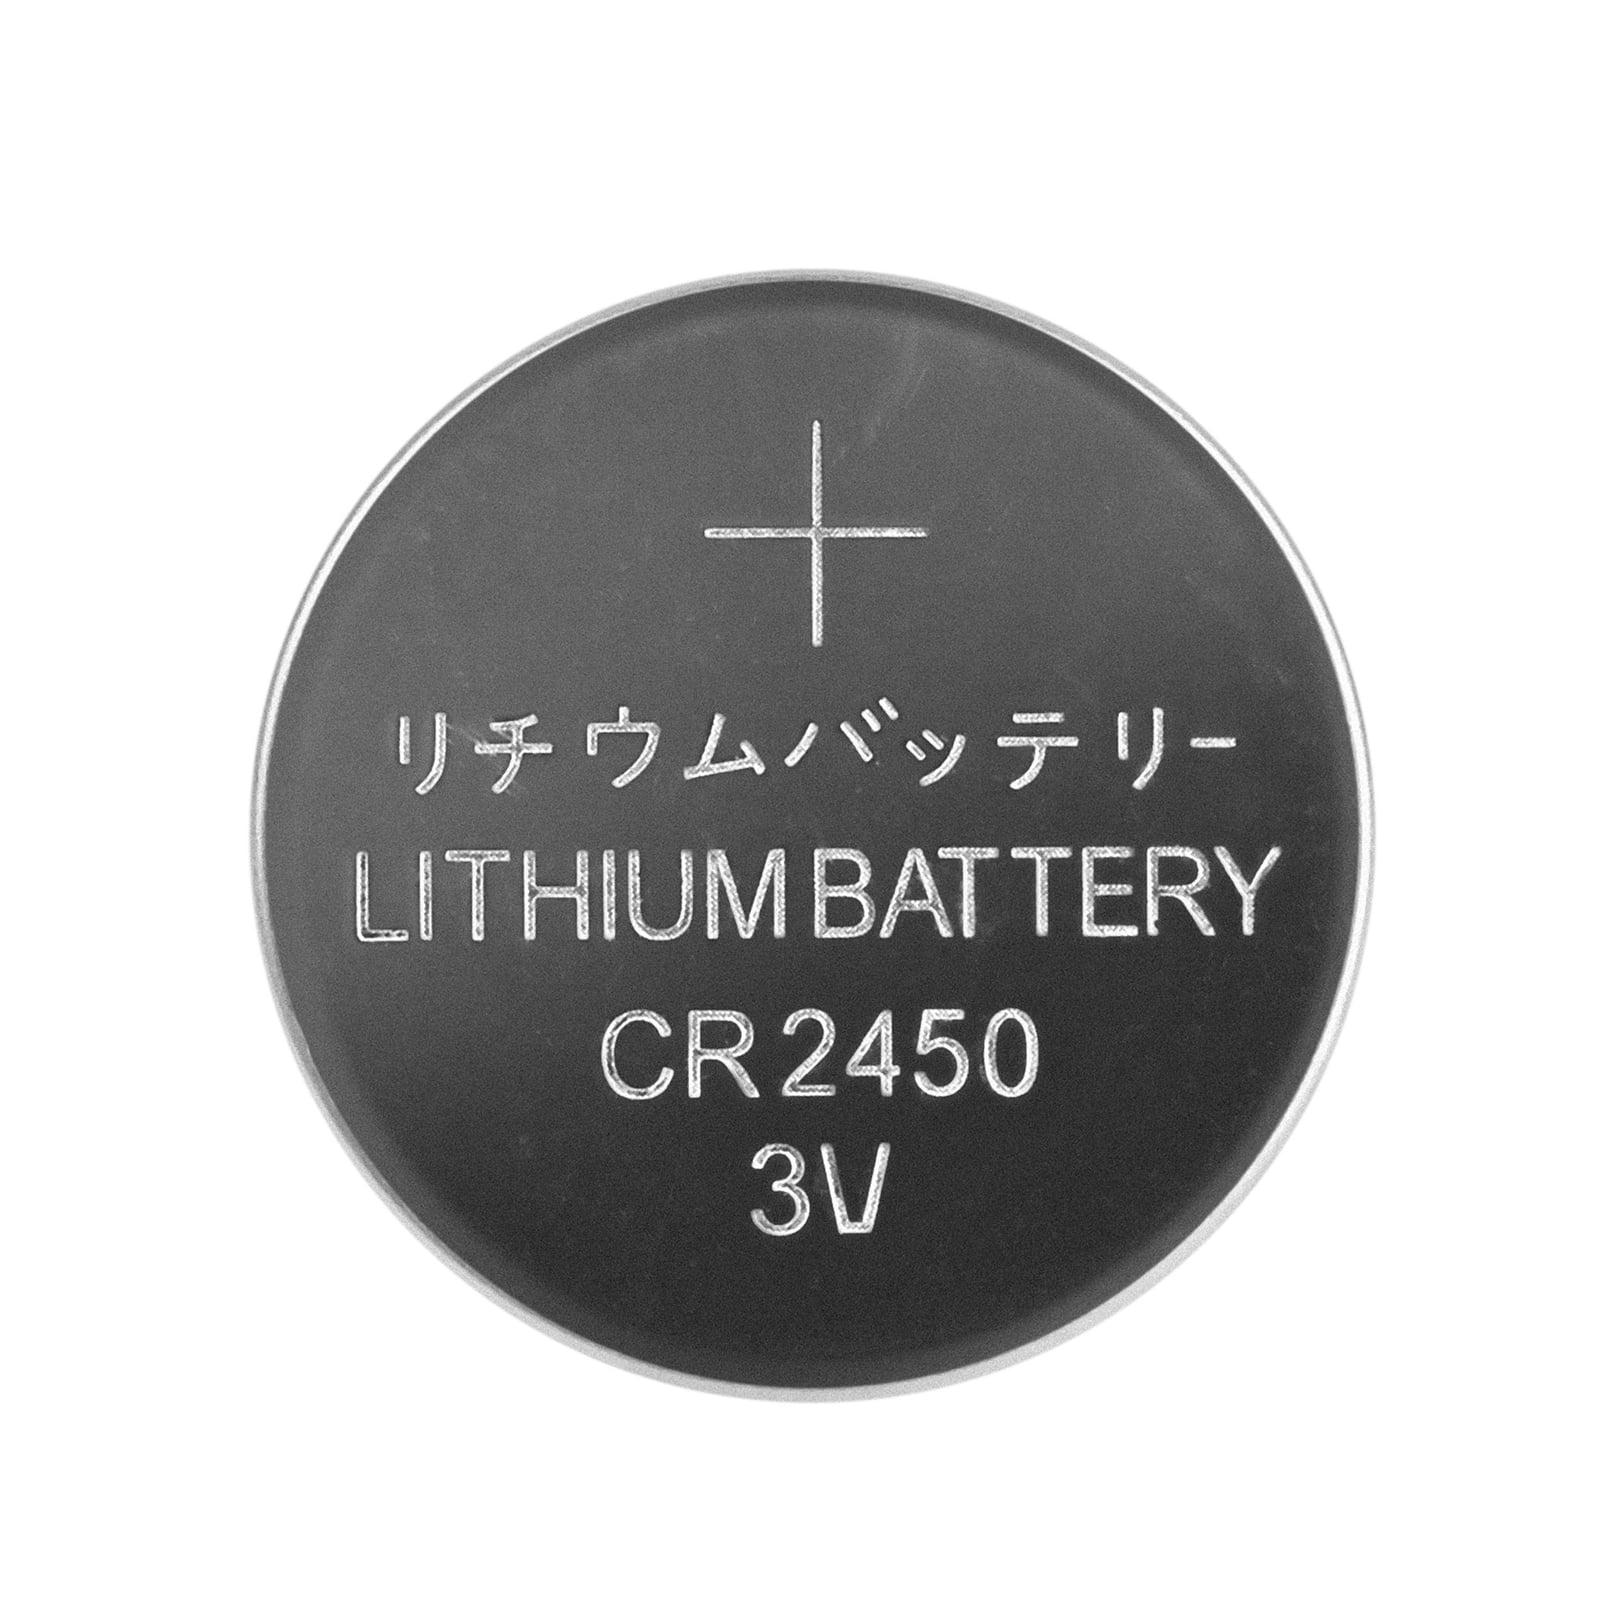 CR 2450 PCB3  Varta Microbattery Pile-bouton, Lithium, CR2450, 3V